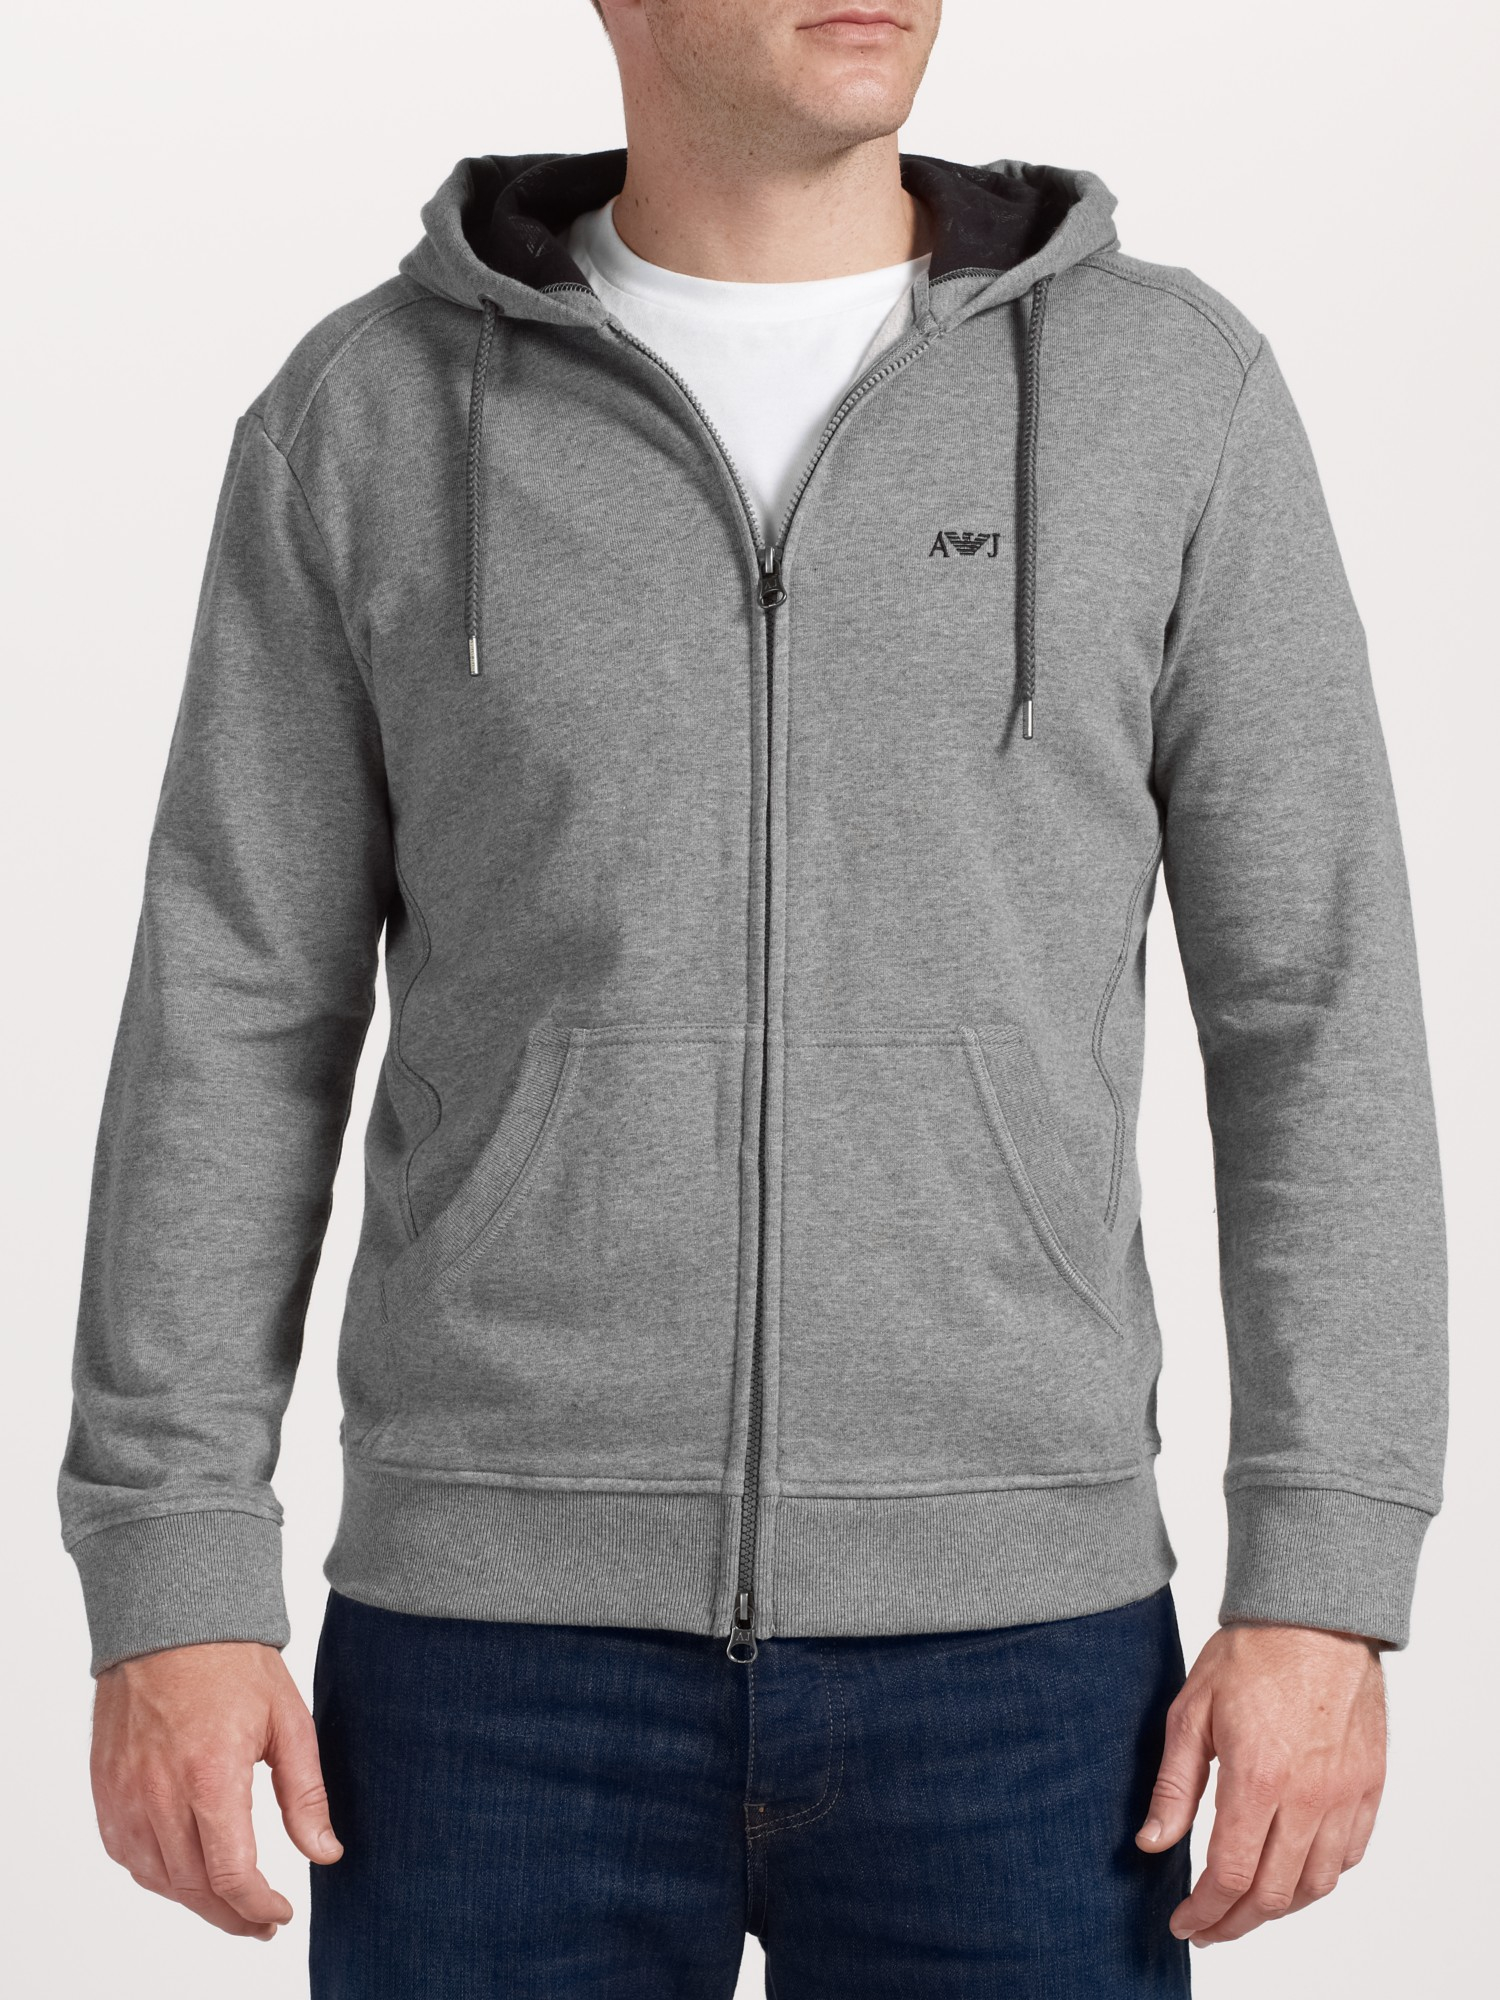 Armani Jeans Denim Small Logo Zip Hoodie in Grey Melange (Grey) for Men -  Lyst